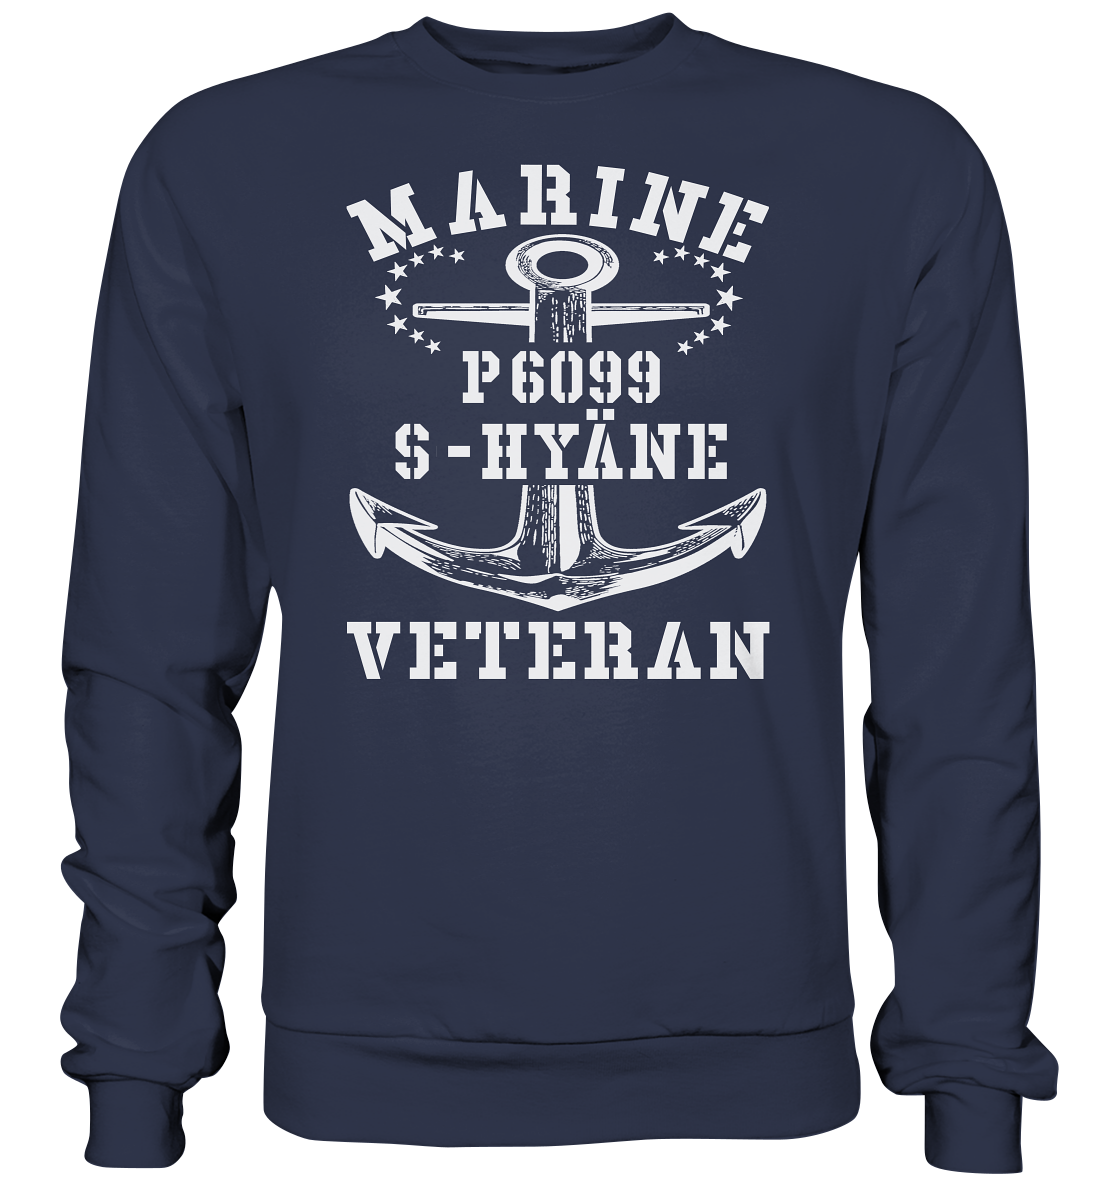 P6099 S-HYÄNE Marine Veteran - Premium Sweatshirt